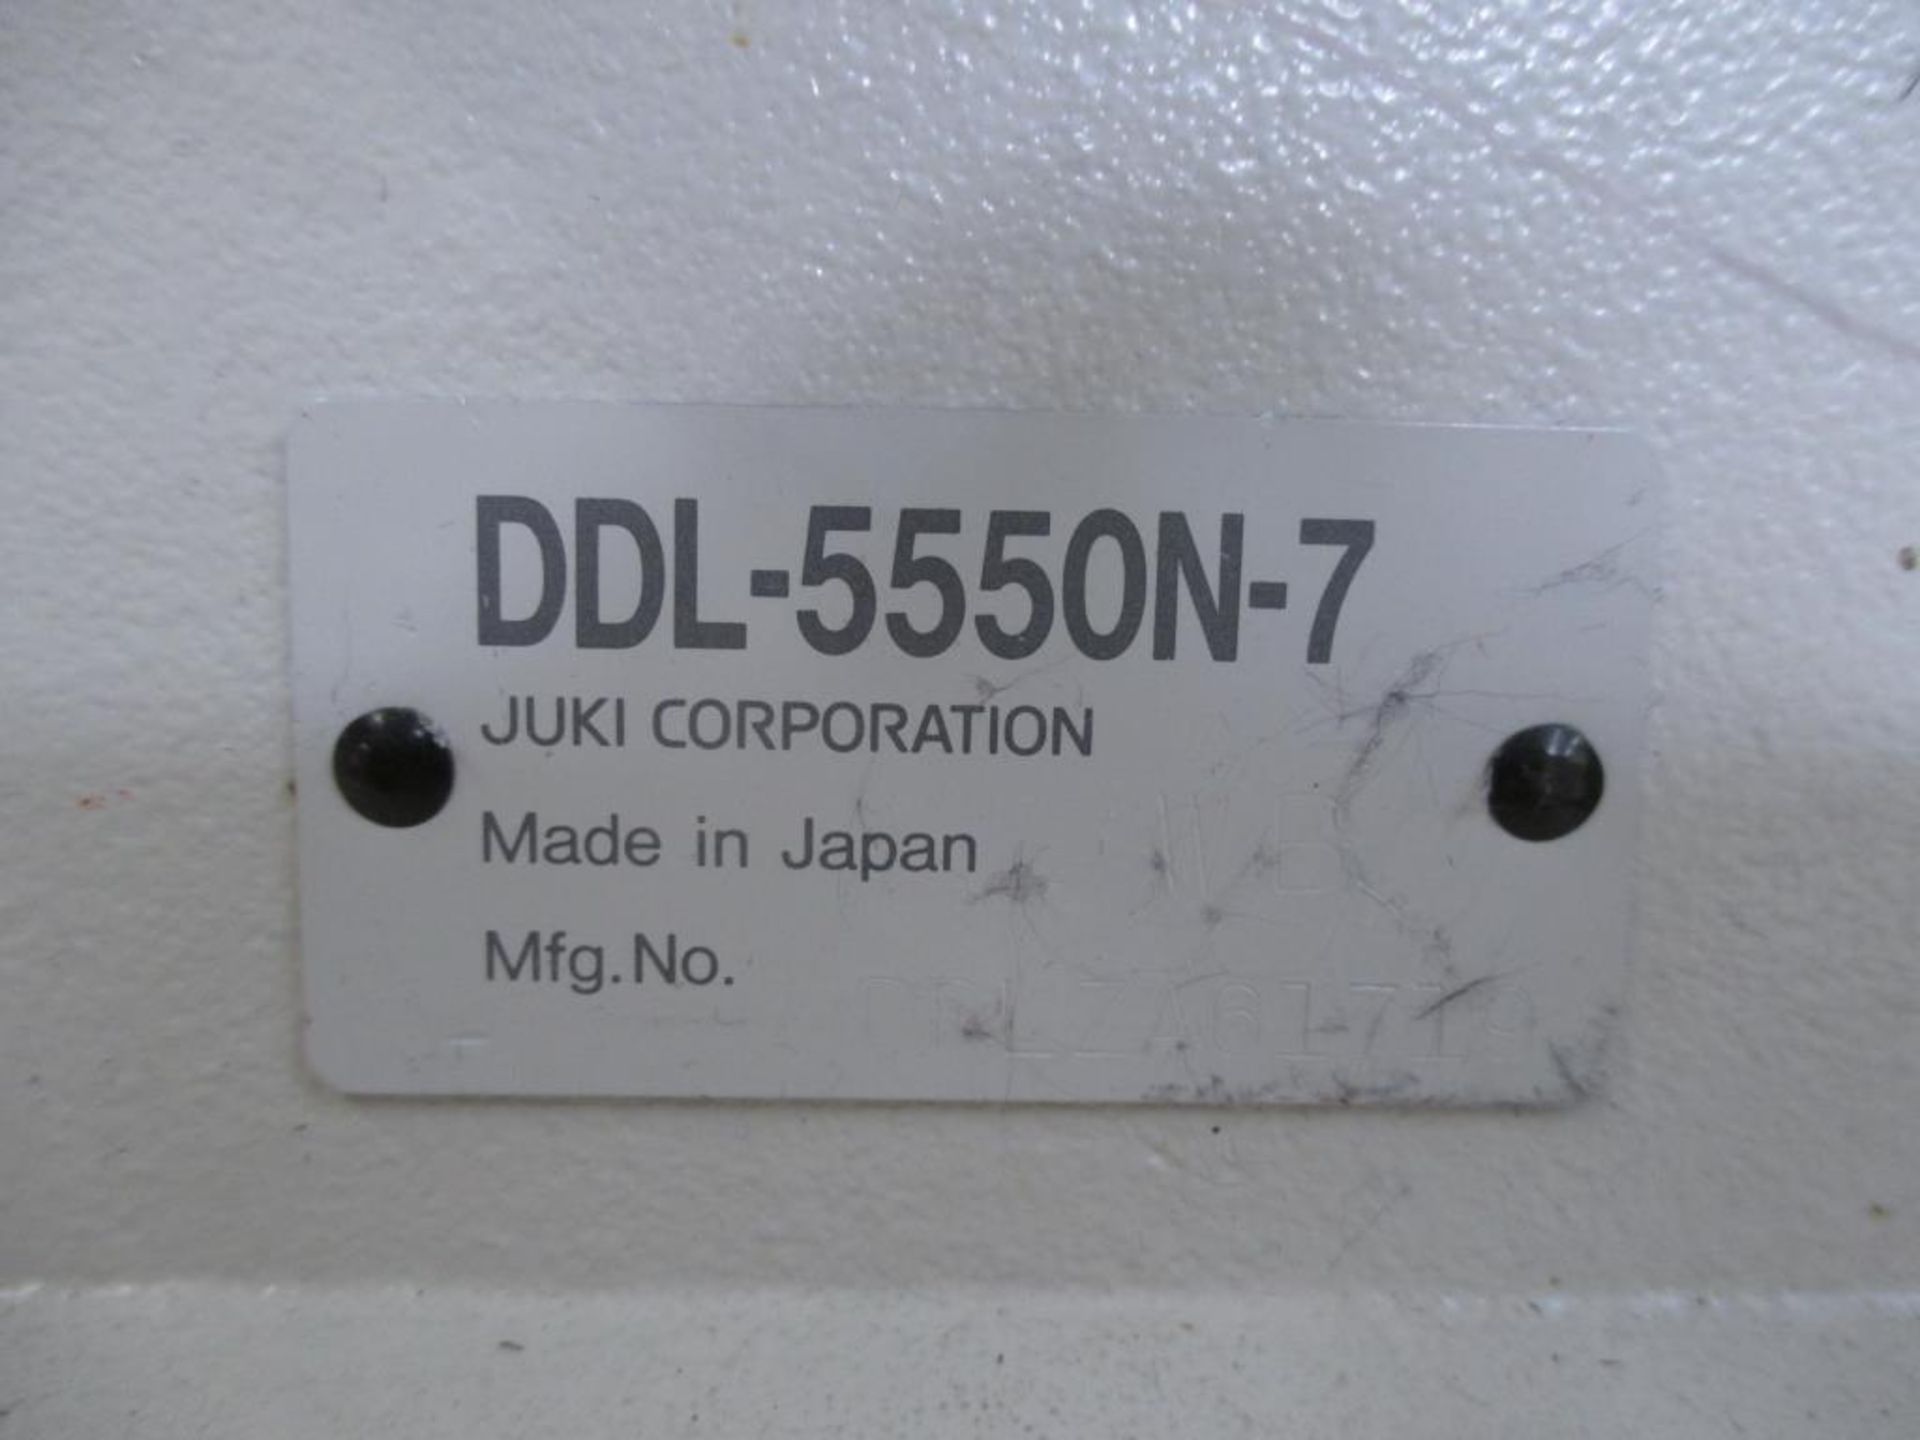 Lockstitch Reverse Industrial Sewing Machine. Juki DDL-5550N-7 1-Needle Lockstitch Reverse - Image 3 of 9